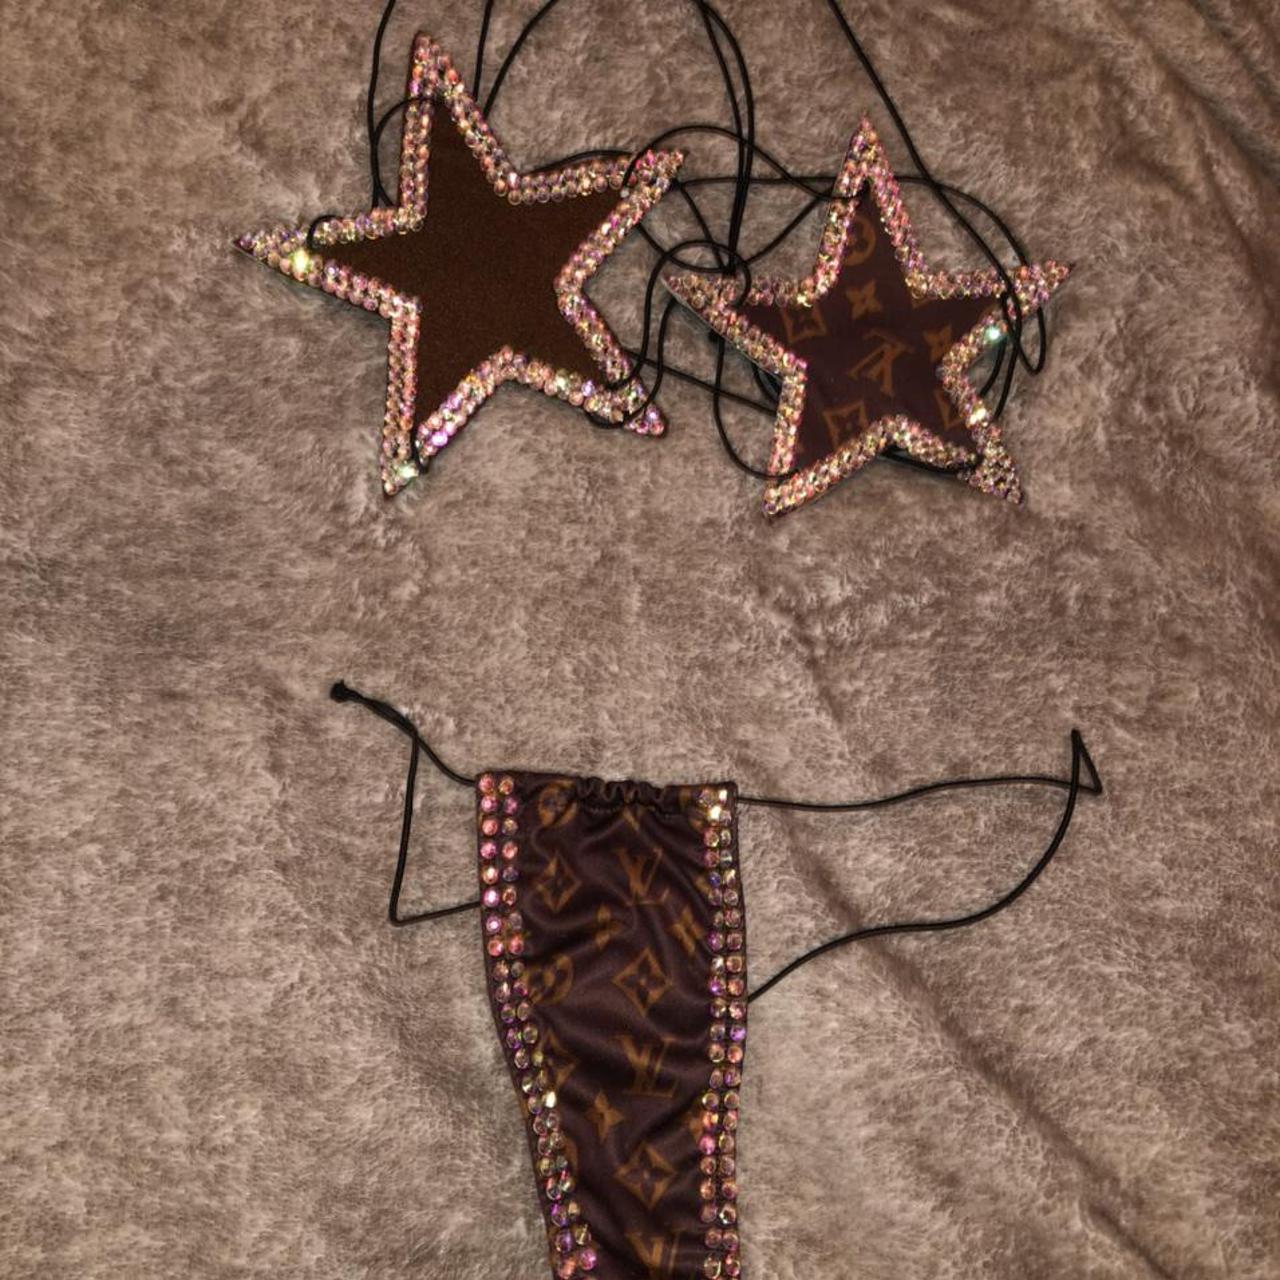 Louis Vuitton G String Bikini